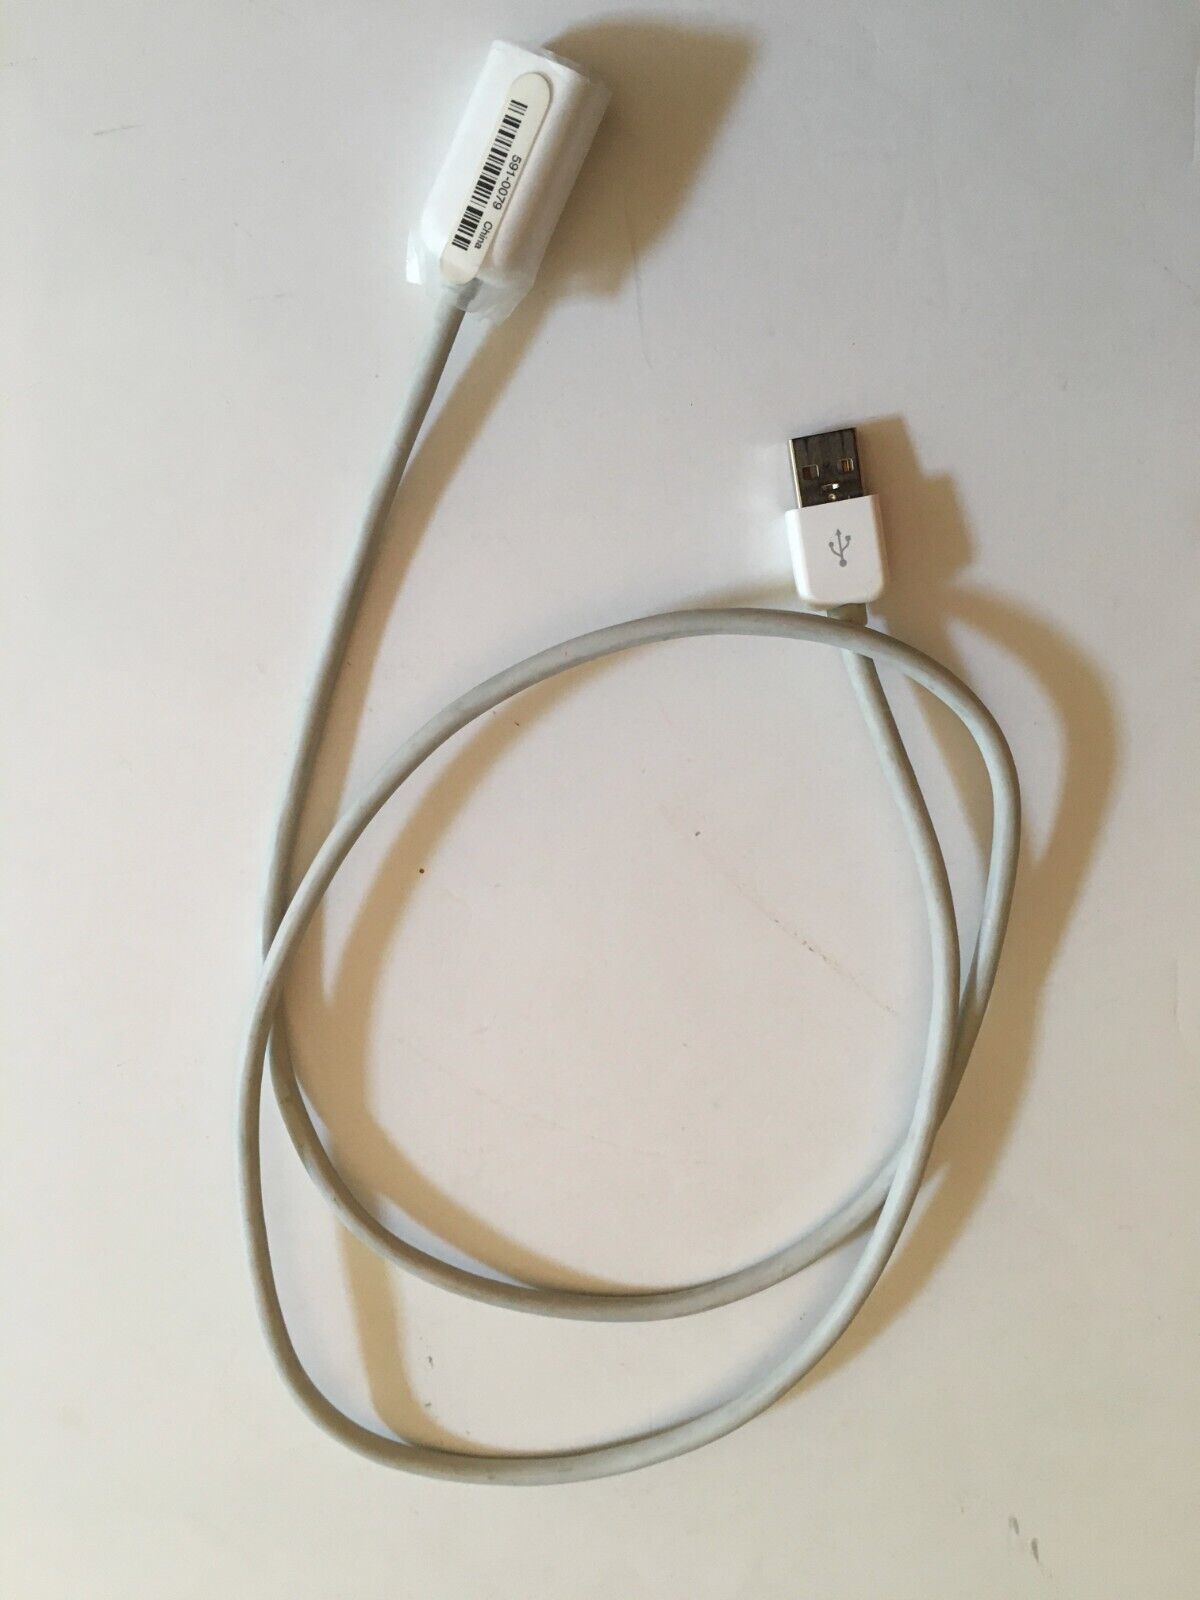 Genuine Apple 3-Ft USB Cable Cord 591-0079, Vintage, Excellent Condition